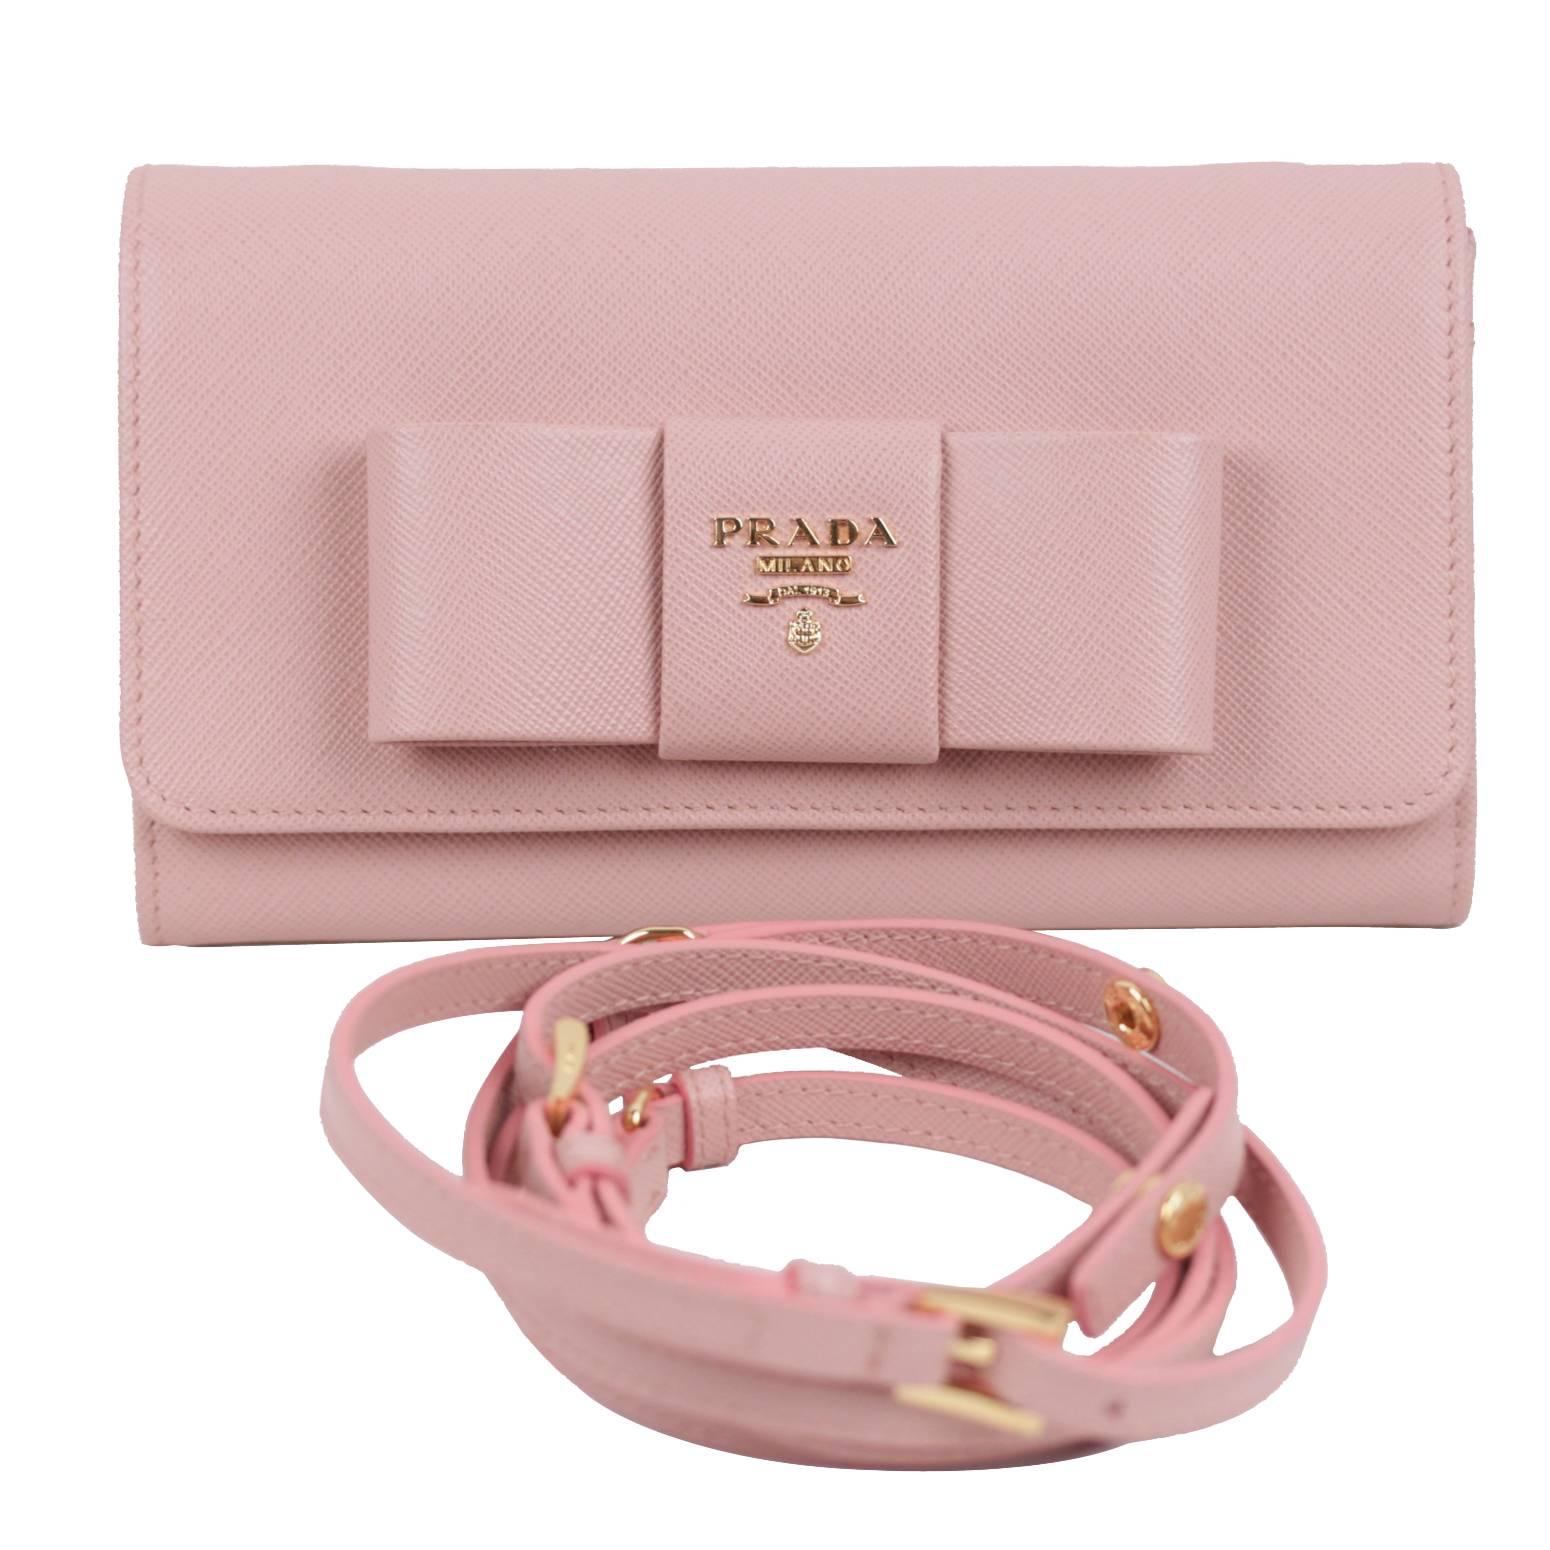 PRADA Pink Leather SAFFIANO FIOCCO Ribbon STRAP WALLET Purse WOC 1M1437 w/BOX